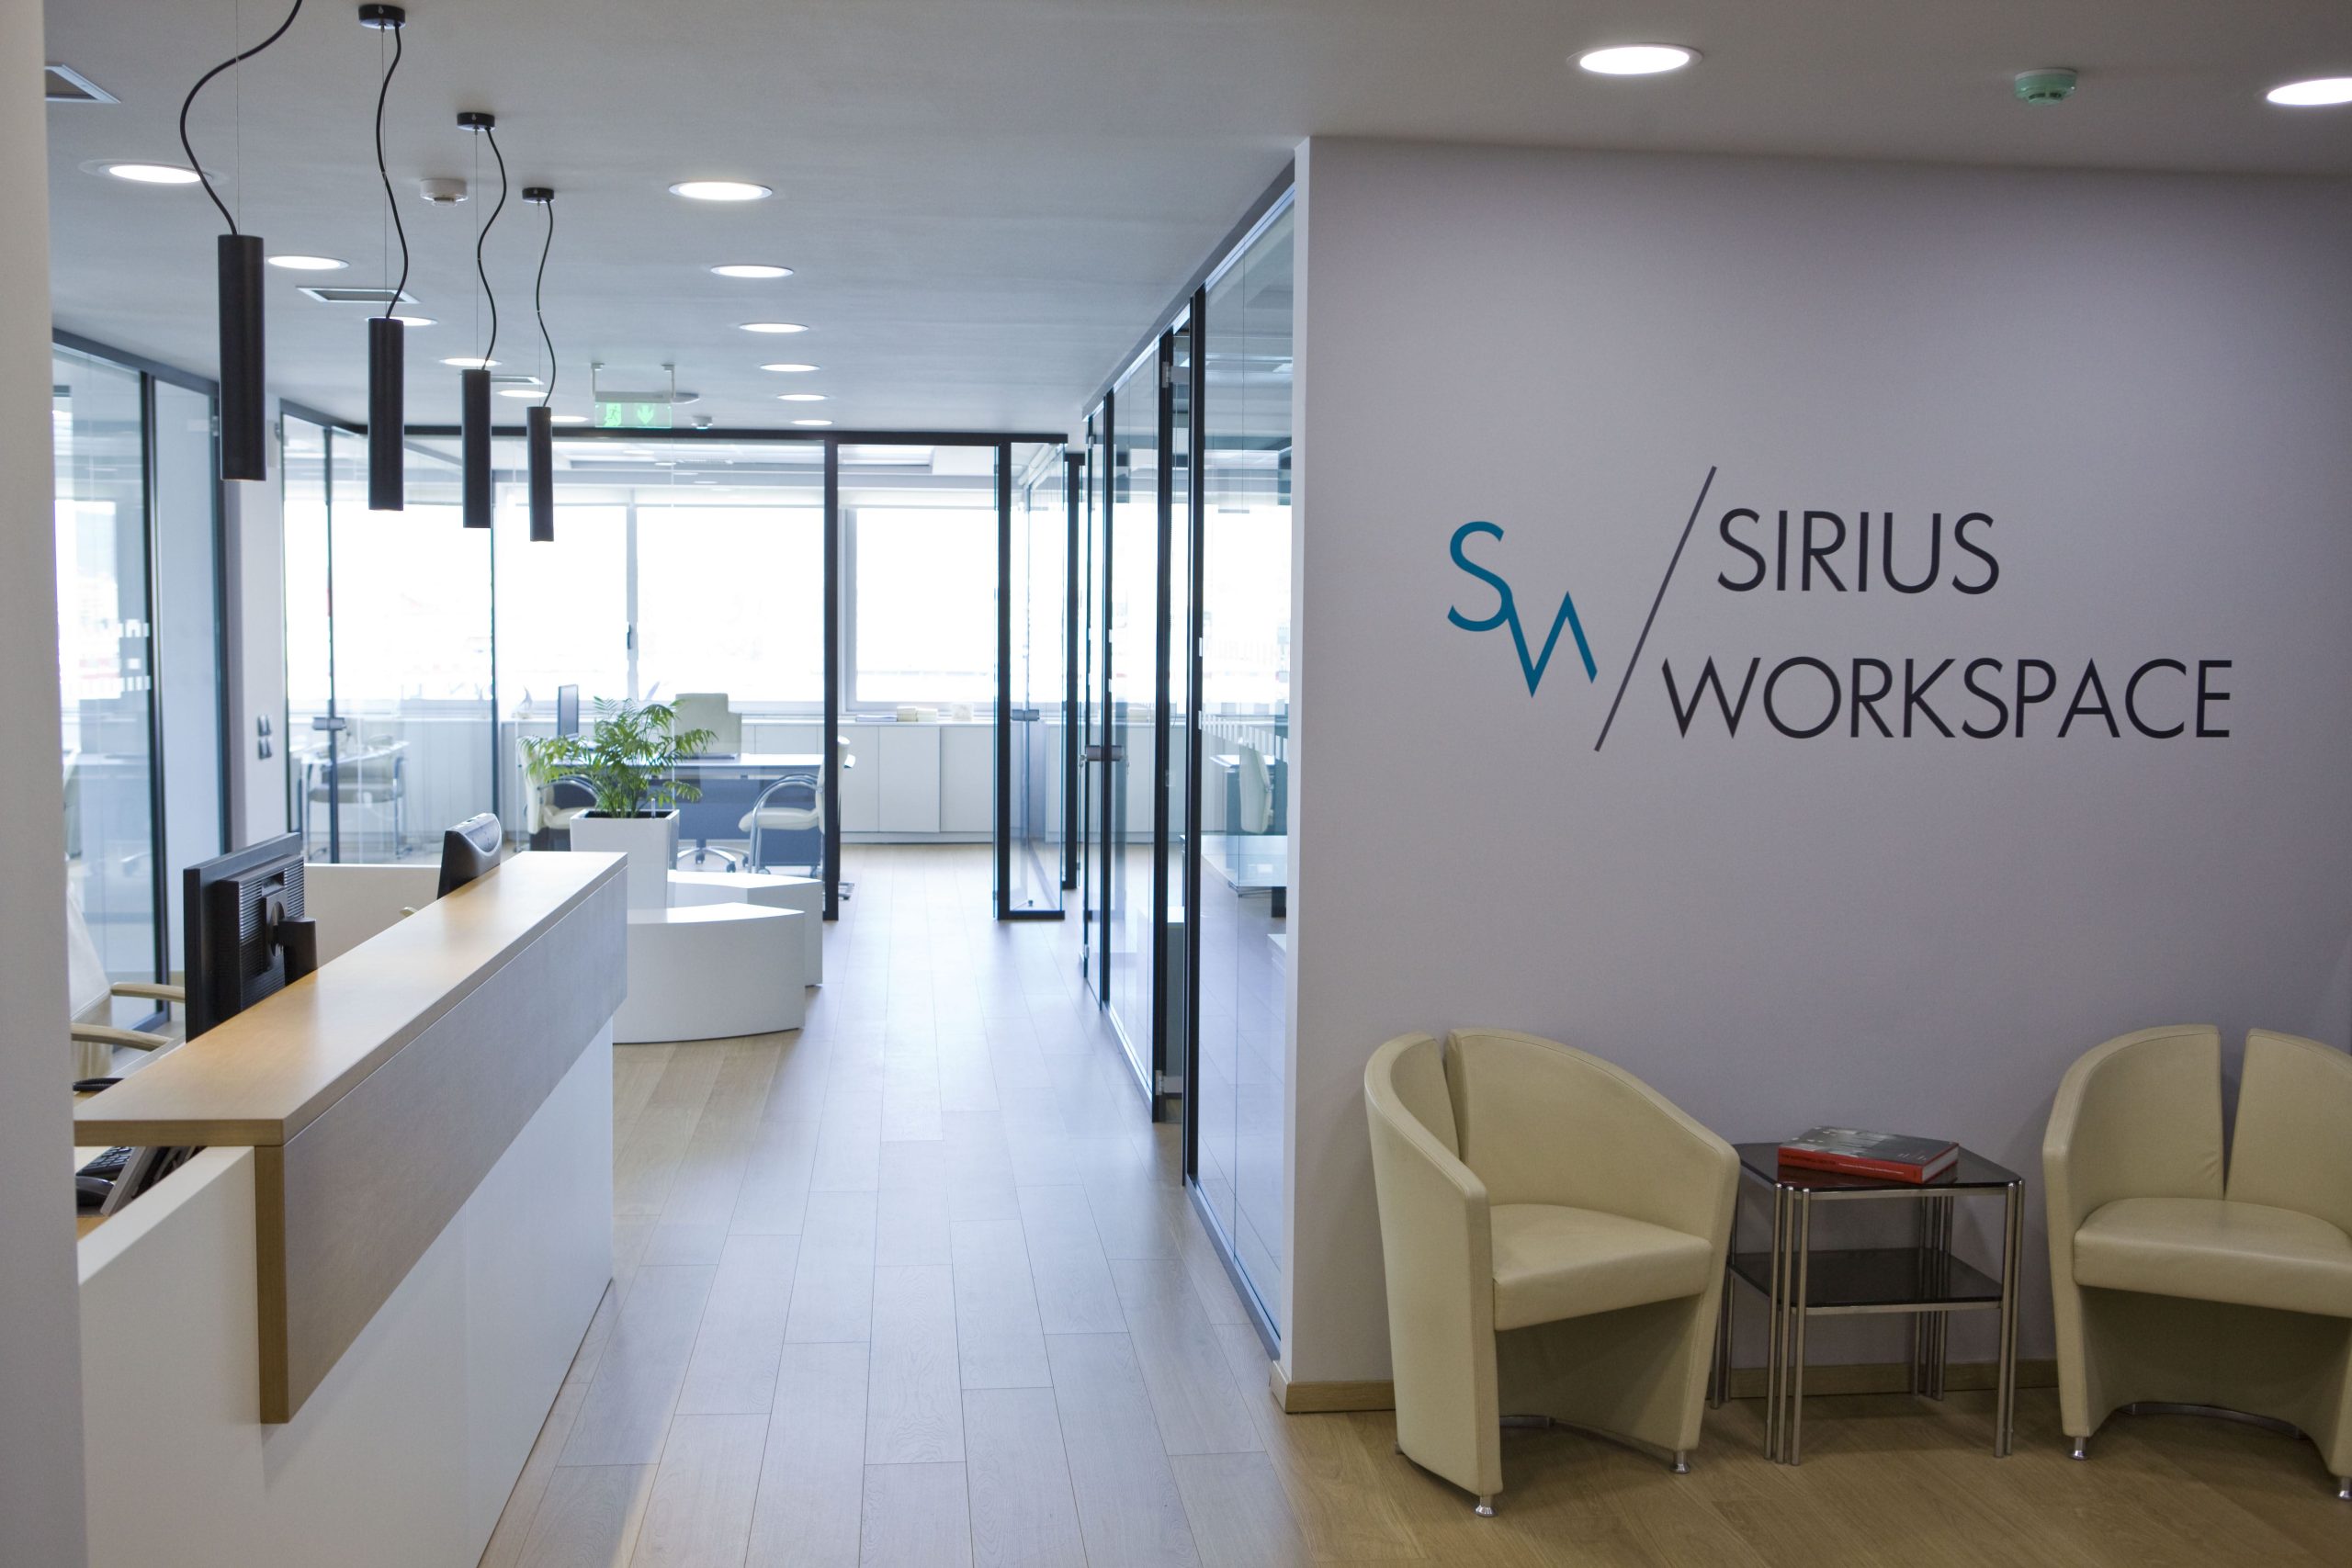 Sirius_workspace_hall